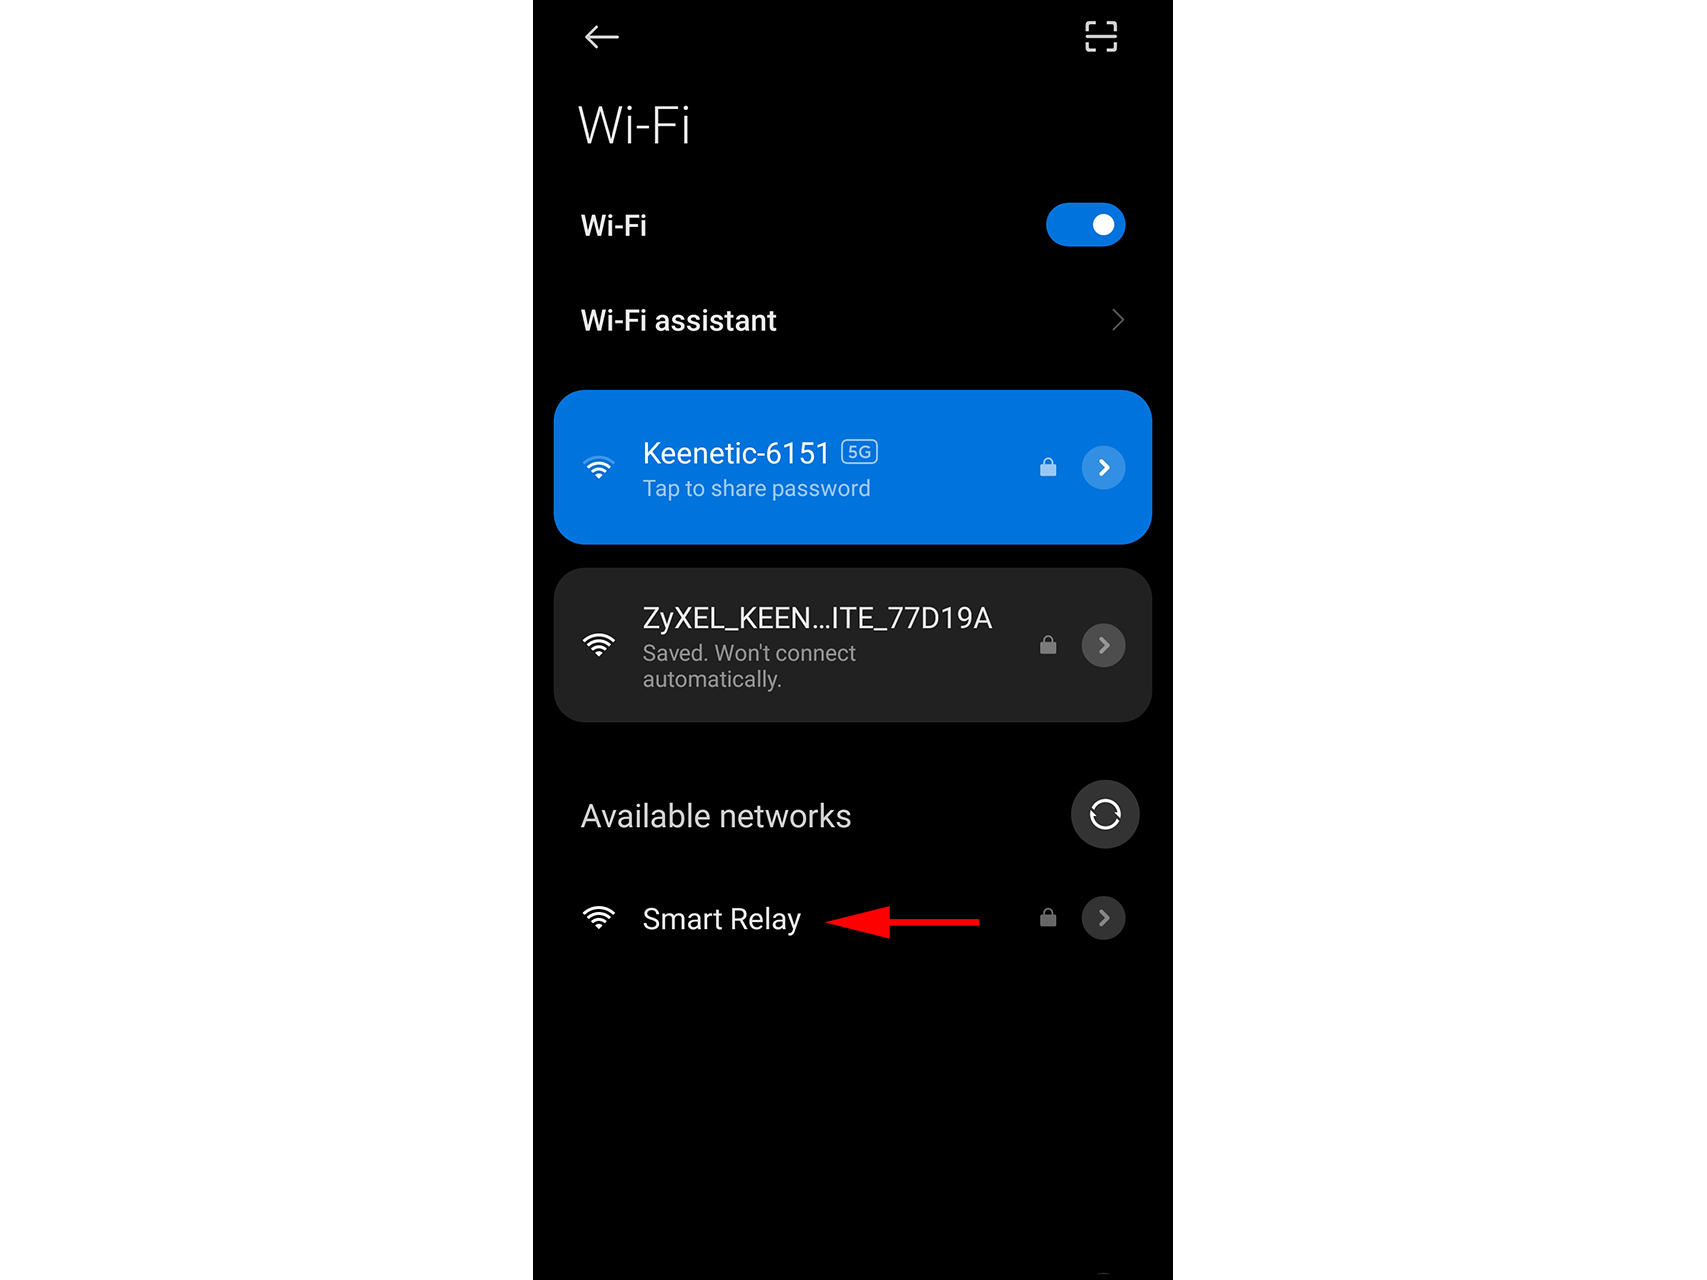 Wi-Fi settings on a smartphone